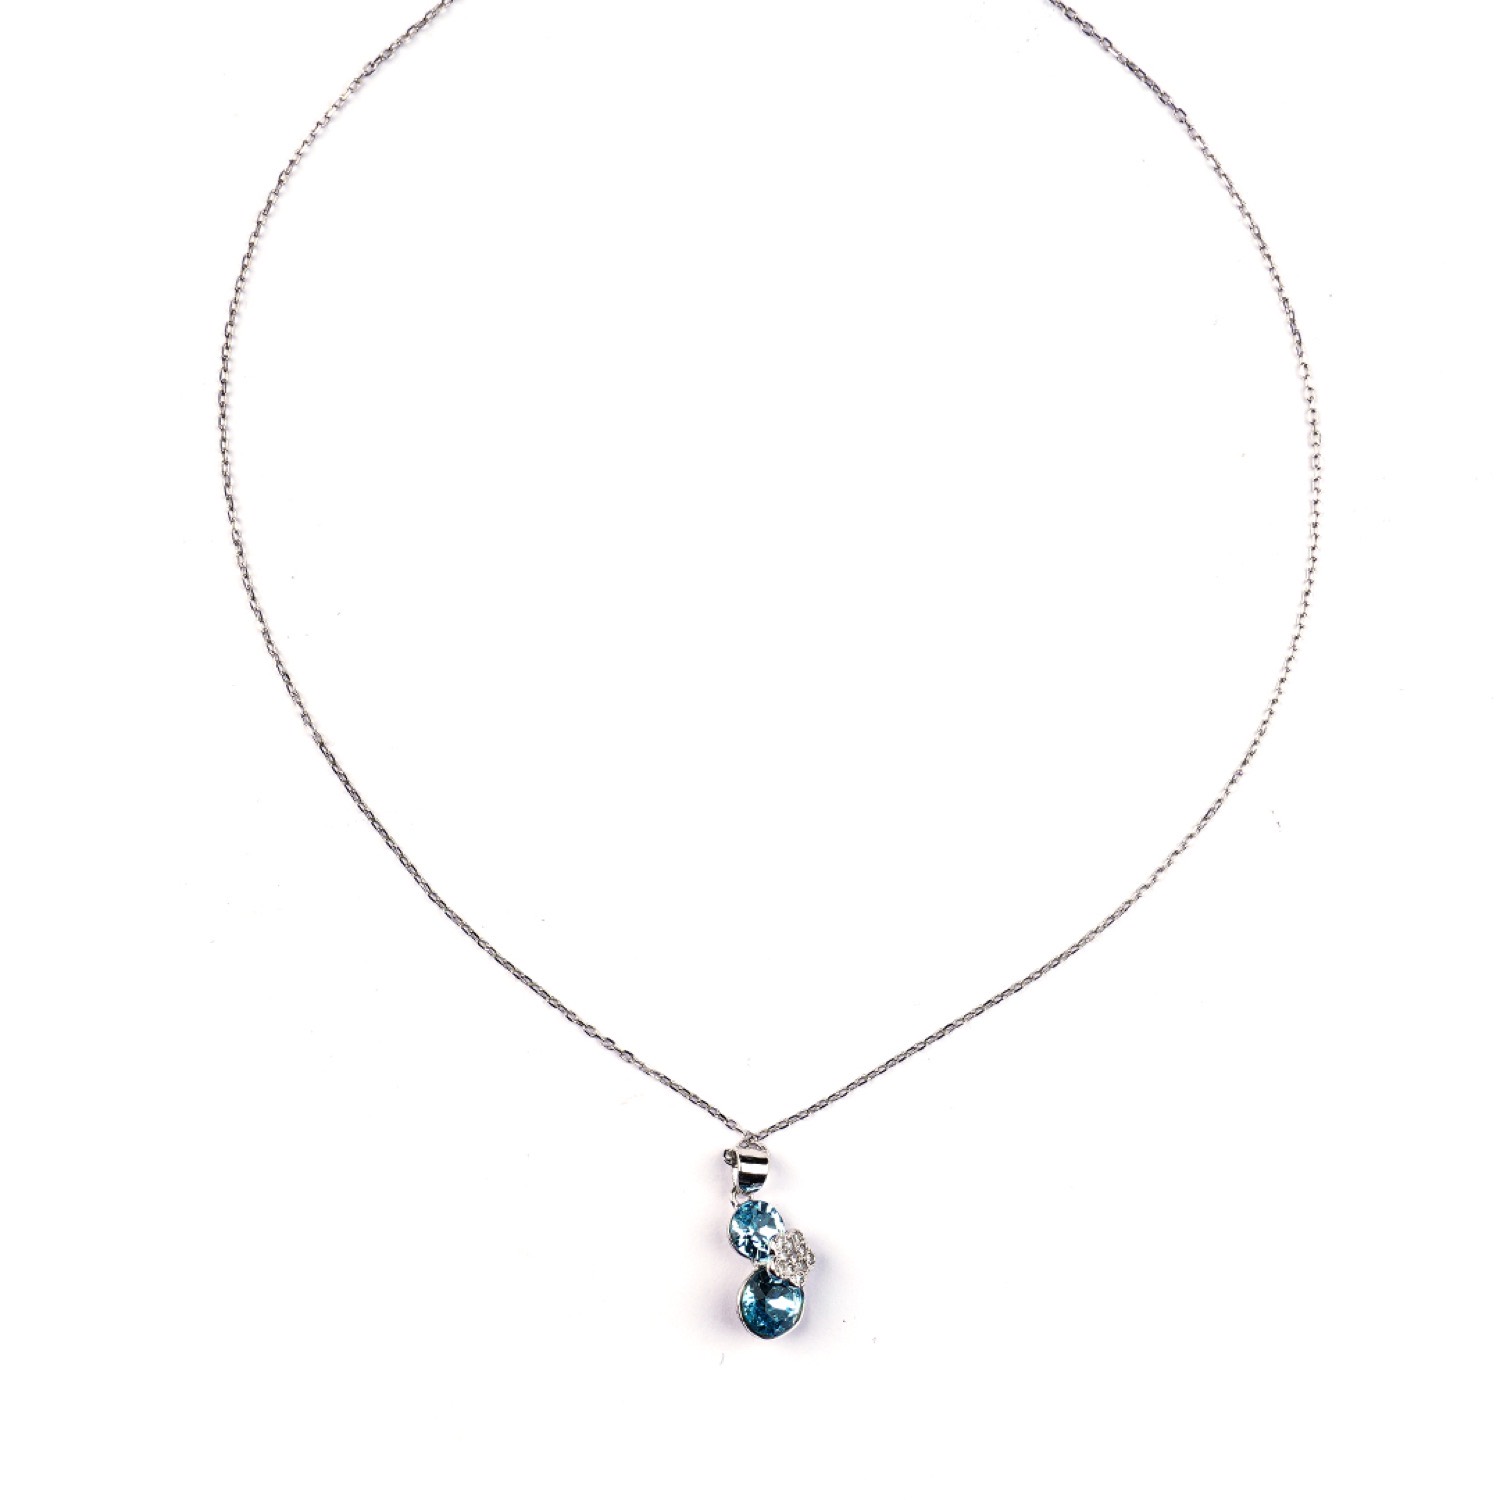 varam_chains_072022_blue_stone_pendant_silver_chain_5-1